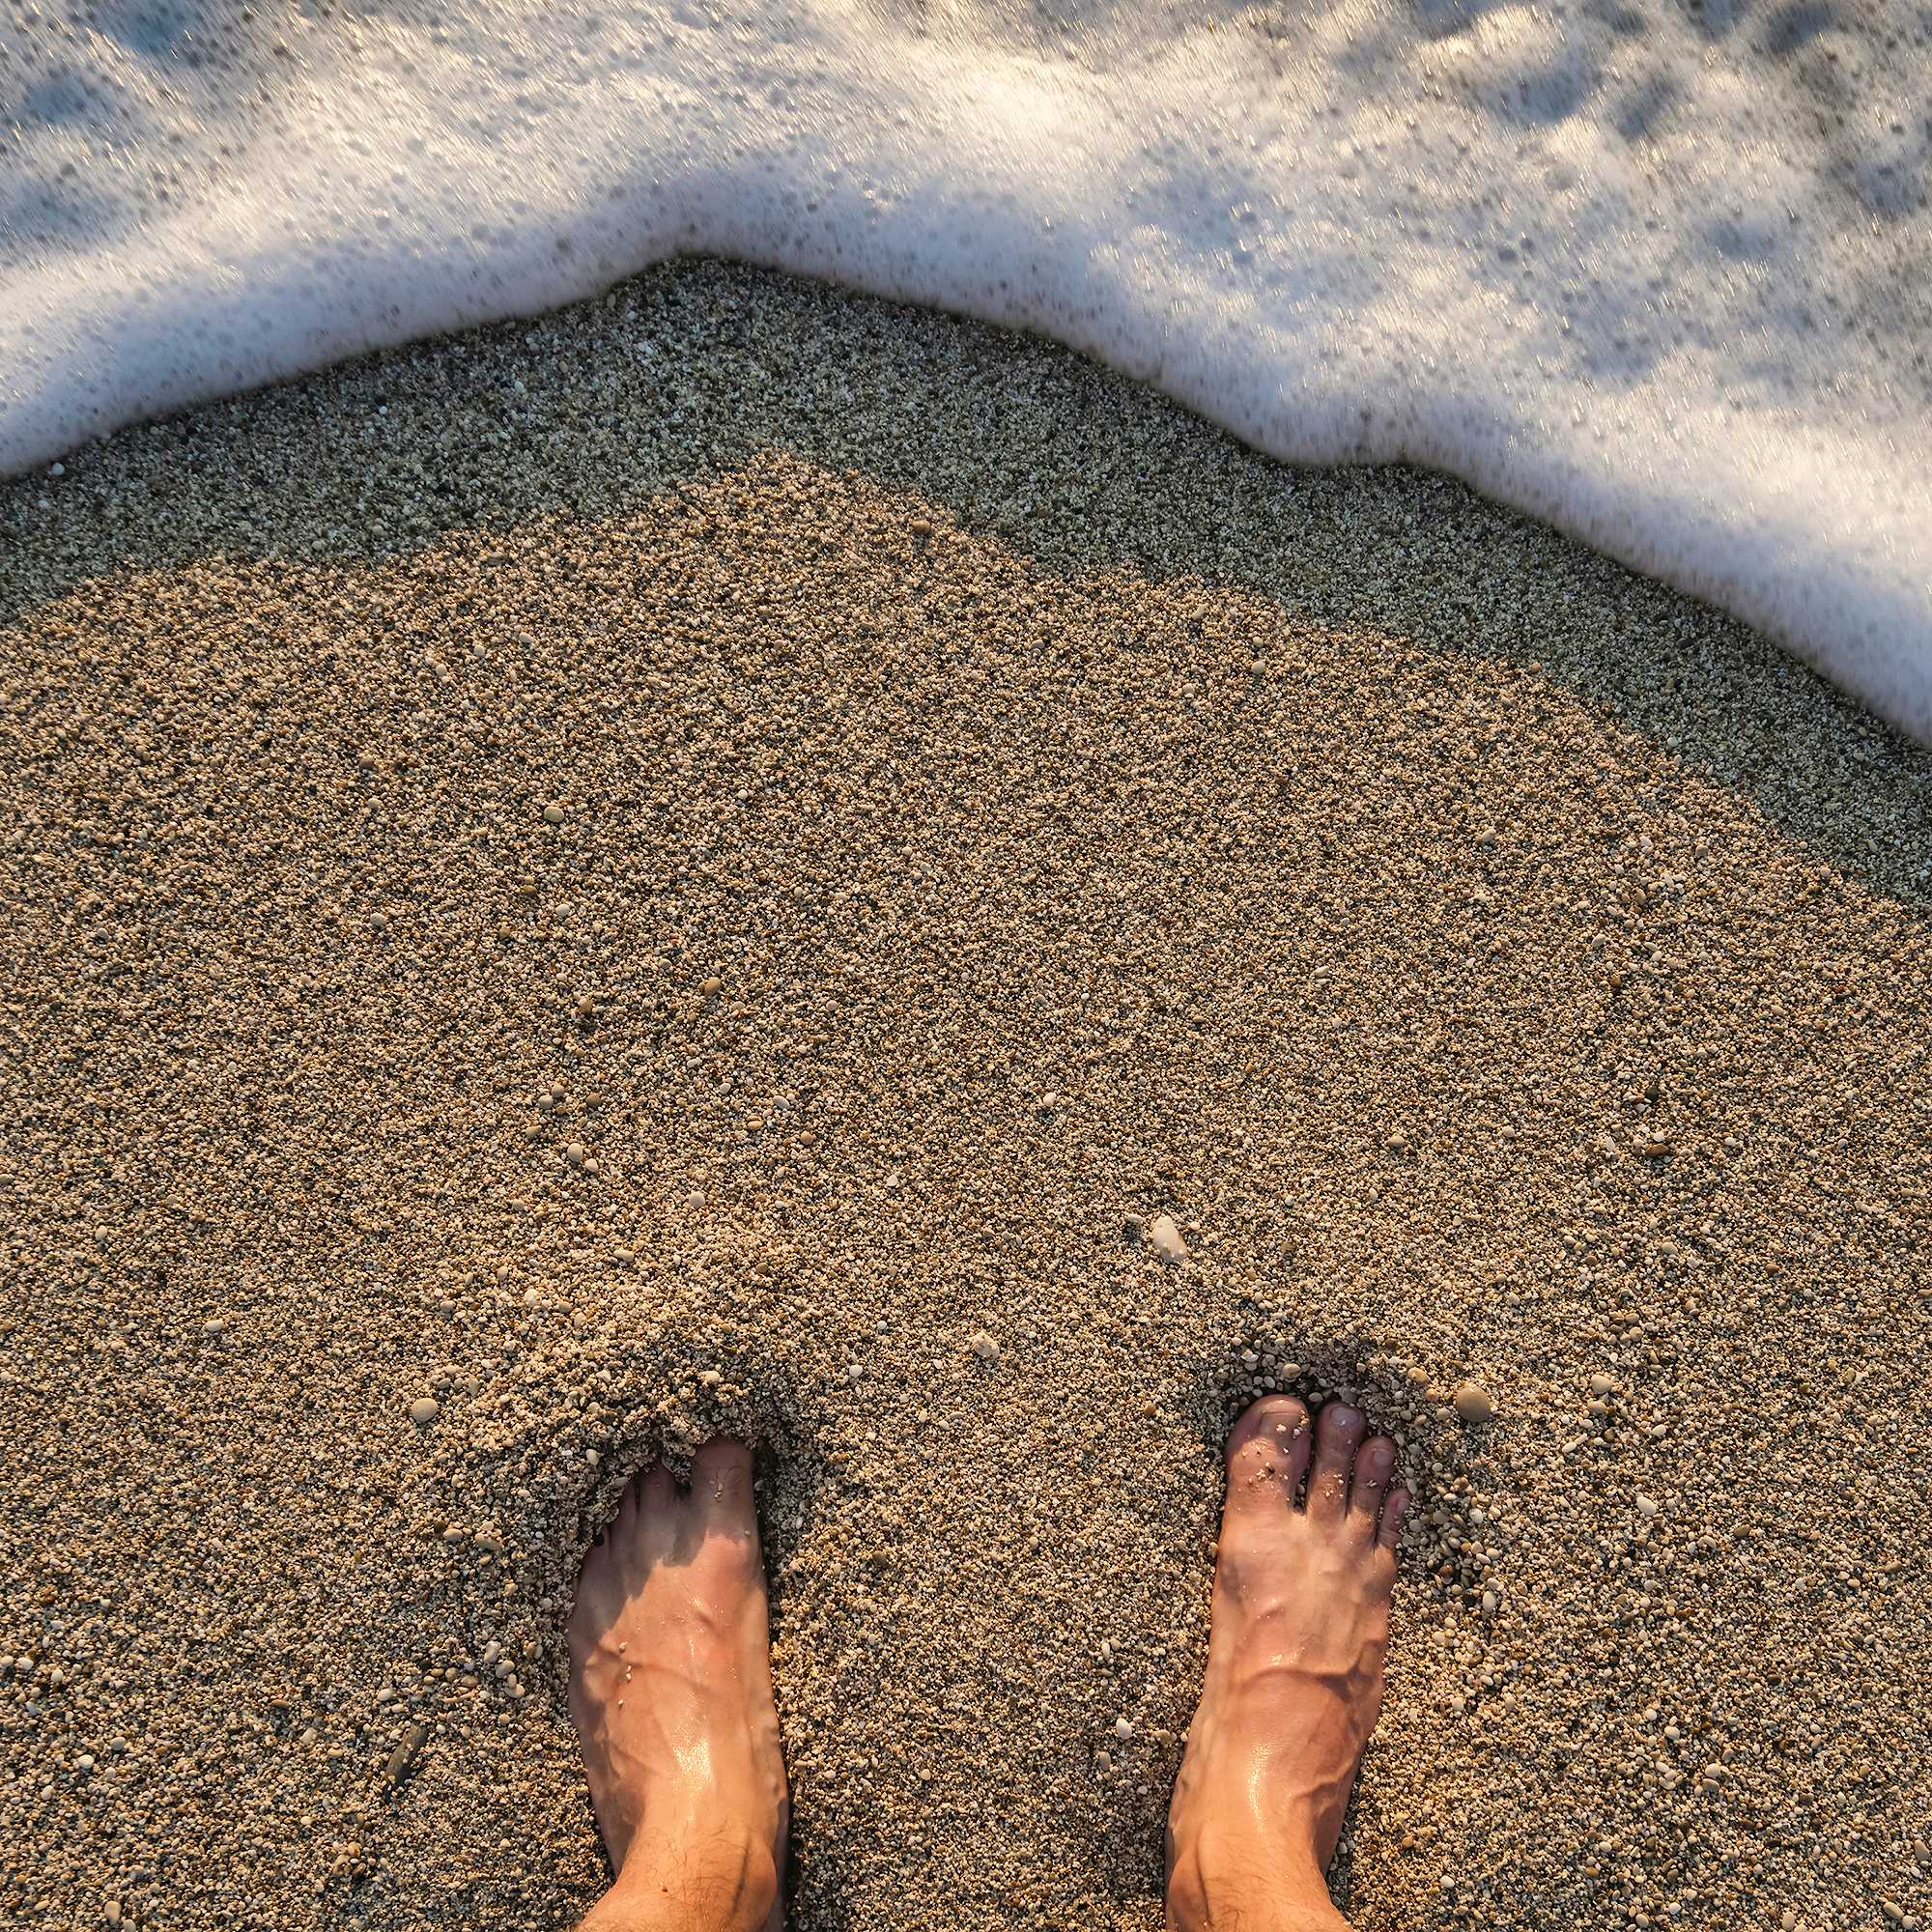 Photo Caption: Απολαύστε τη ψιλή άμμο στην παραλία 20 βήματα μακριά